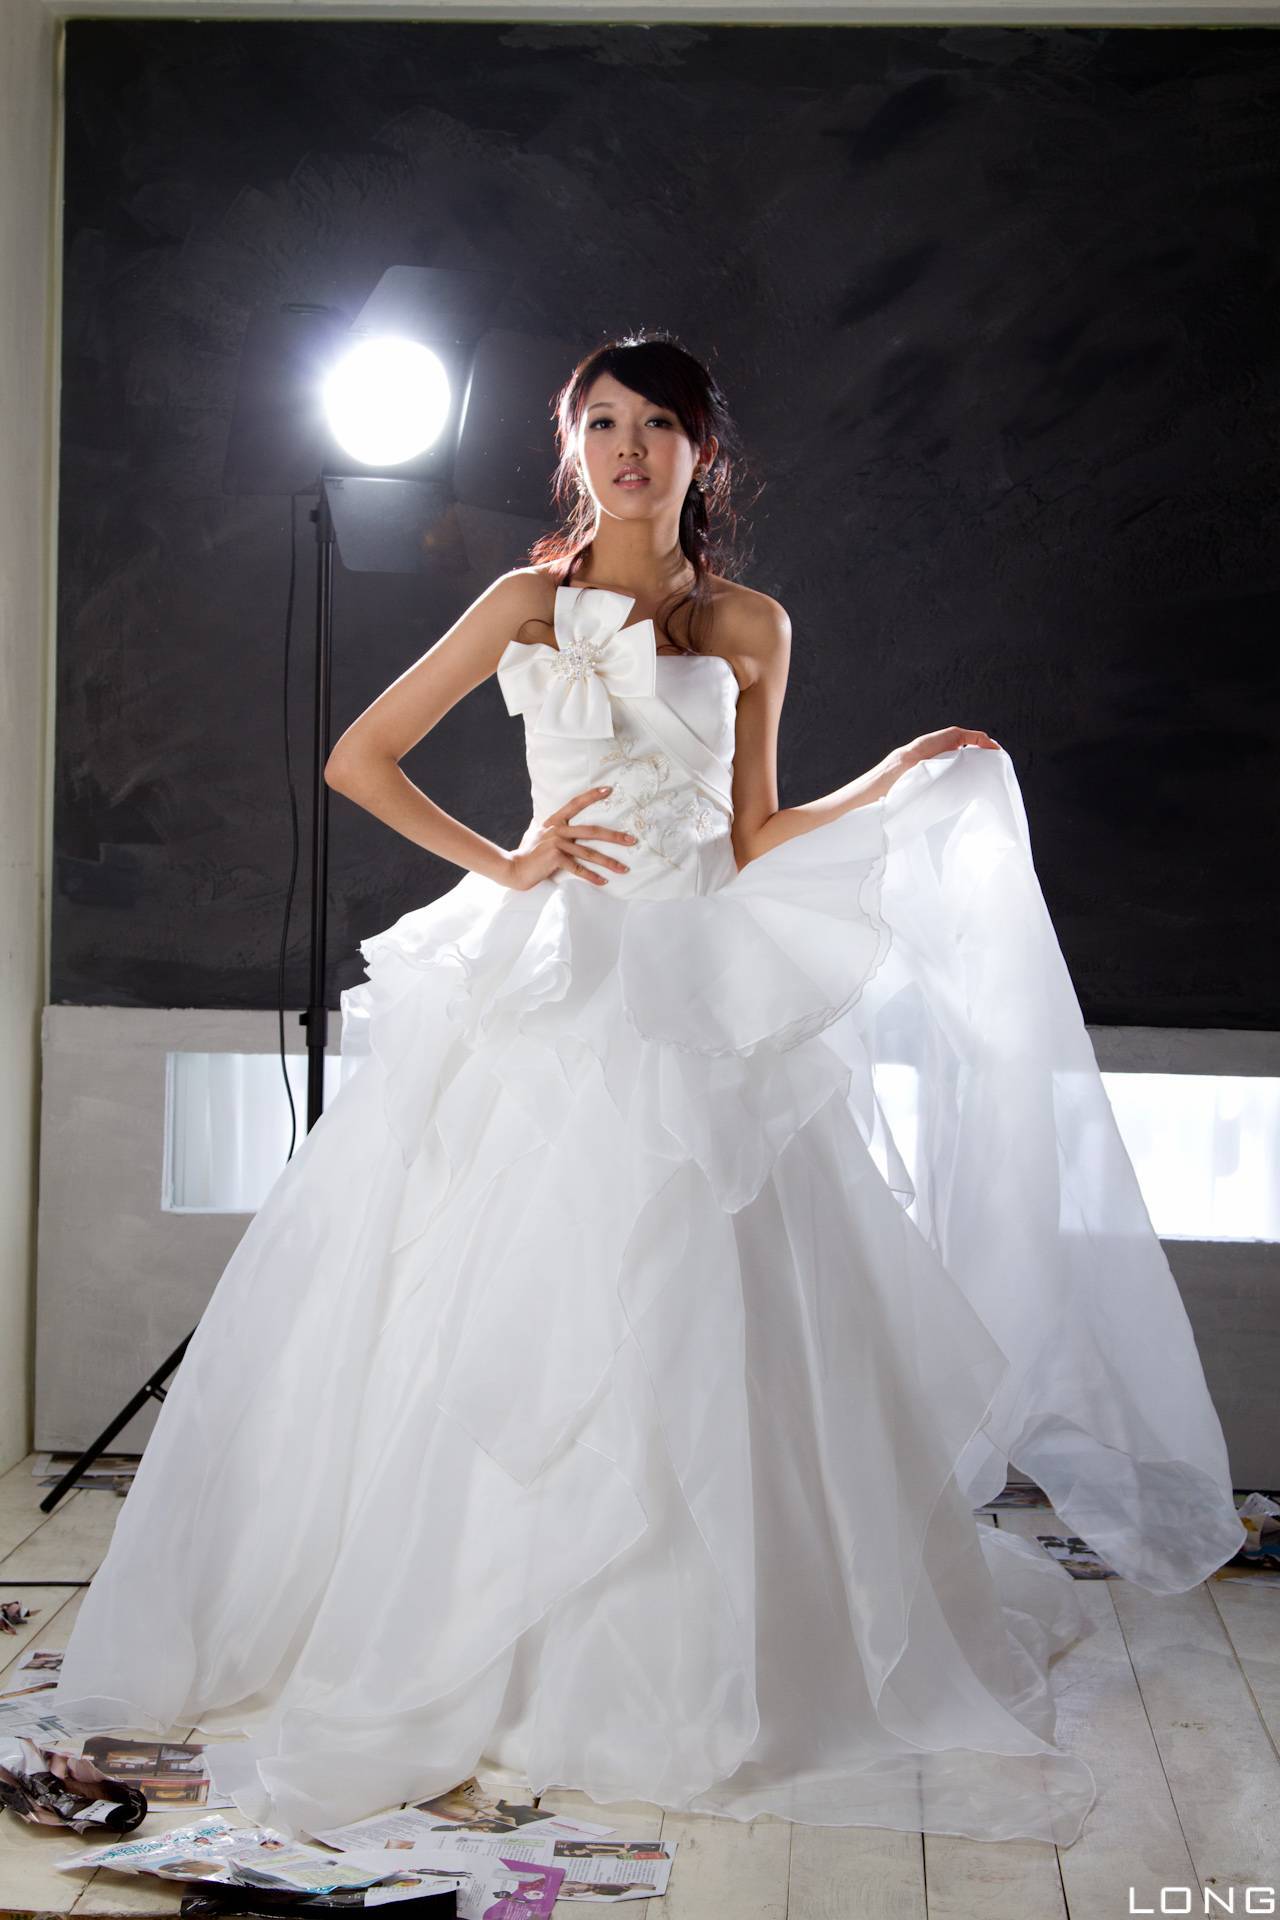 Studio Photo] Jill Weiting's white wedding dress